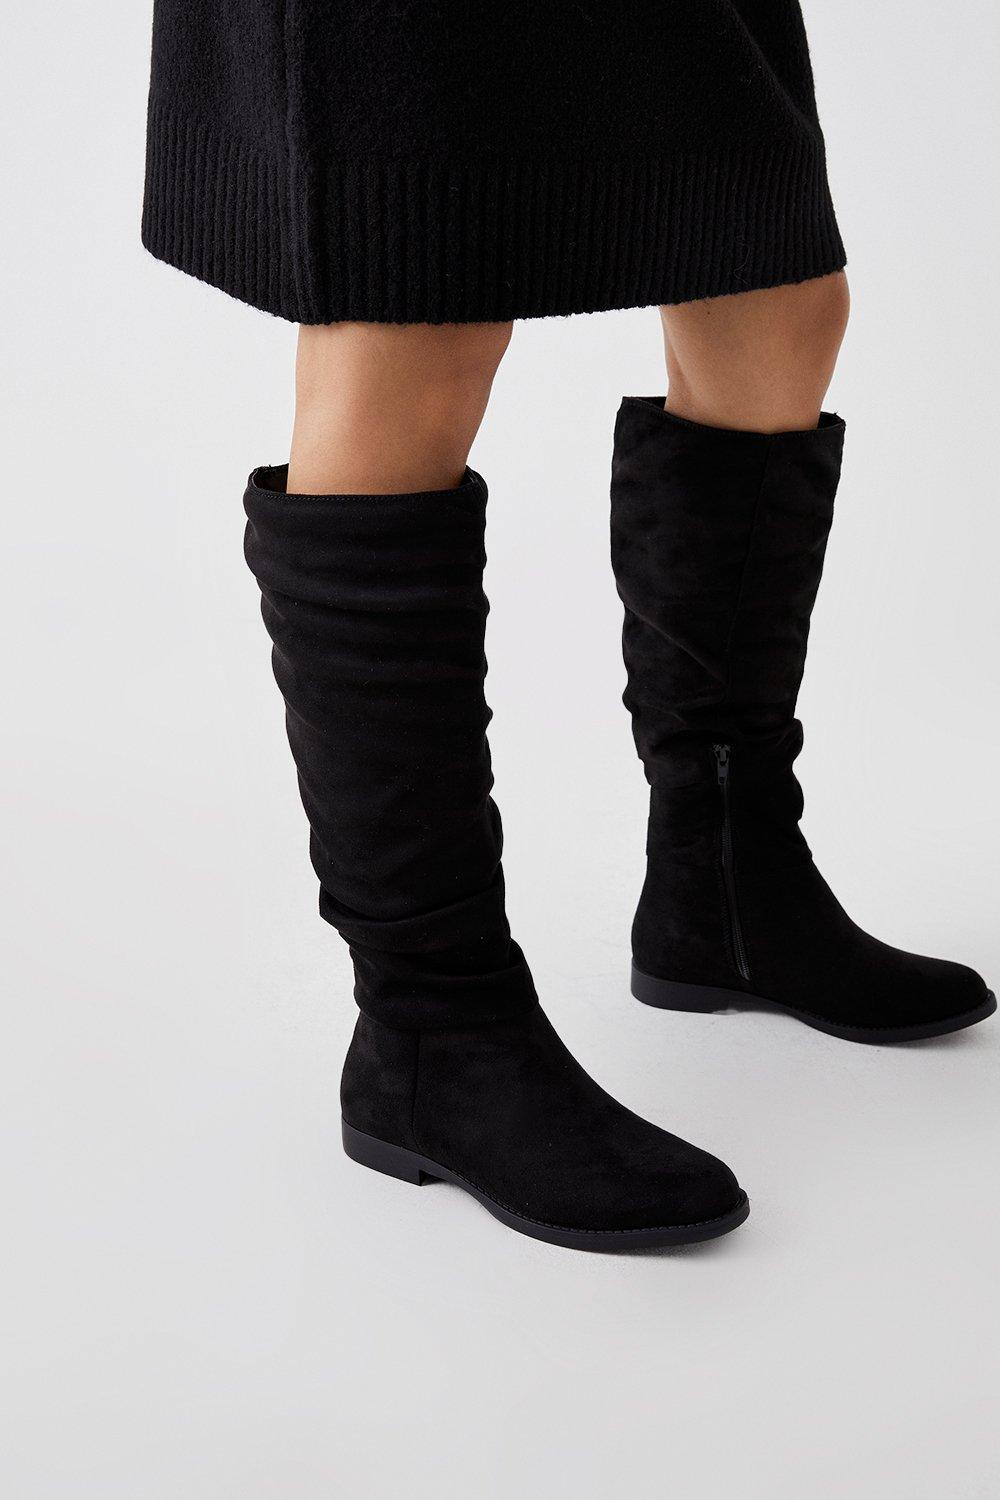 Women’s Karina Flat Ruched Boots - natural black - 5